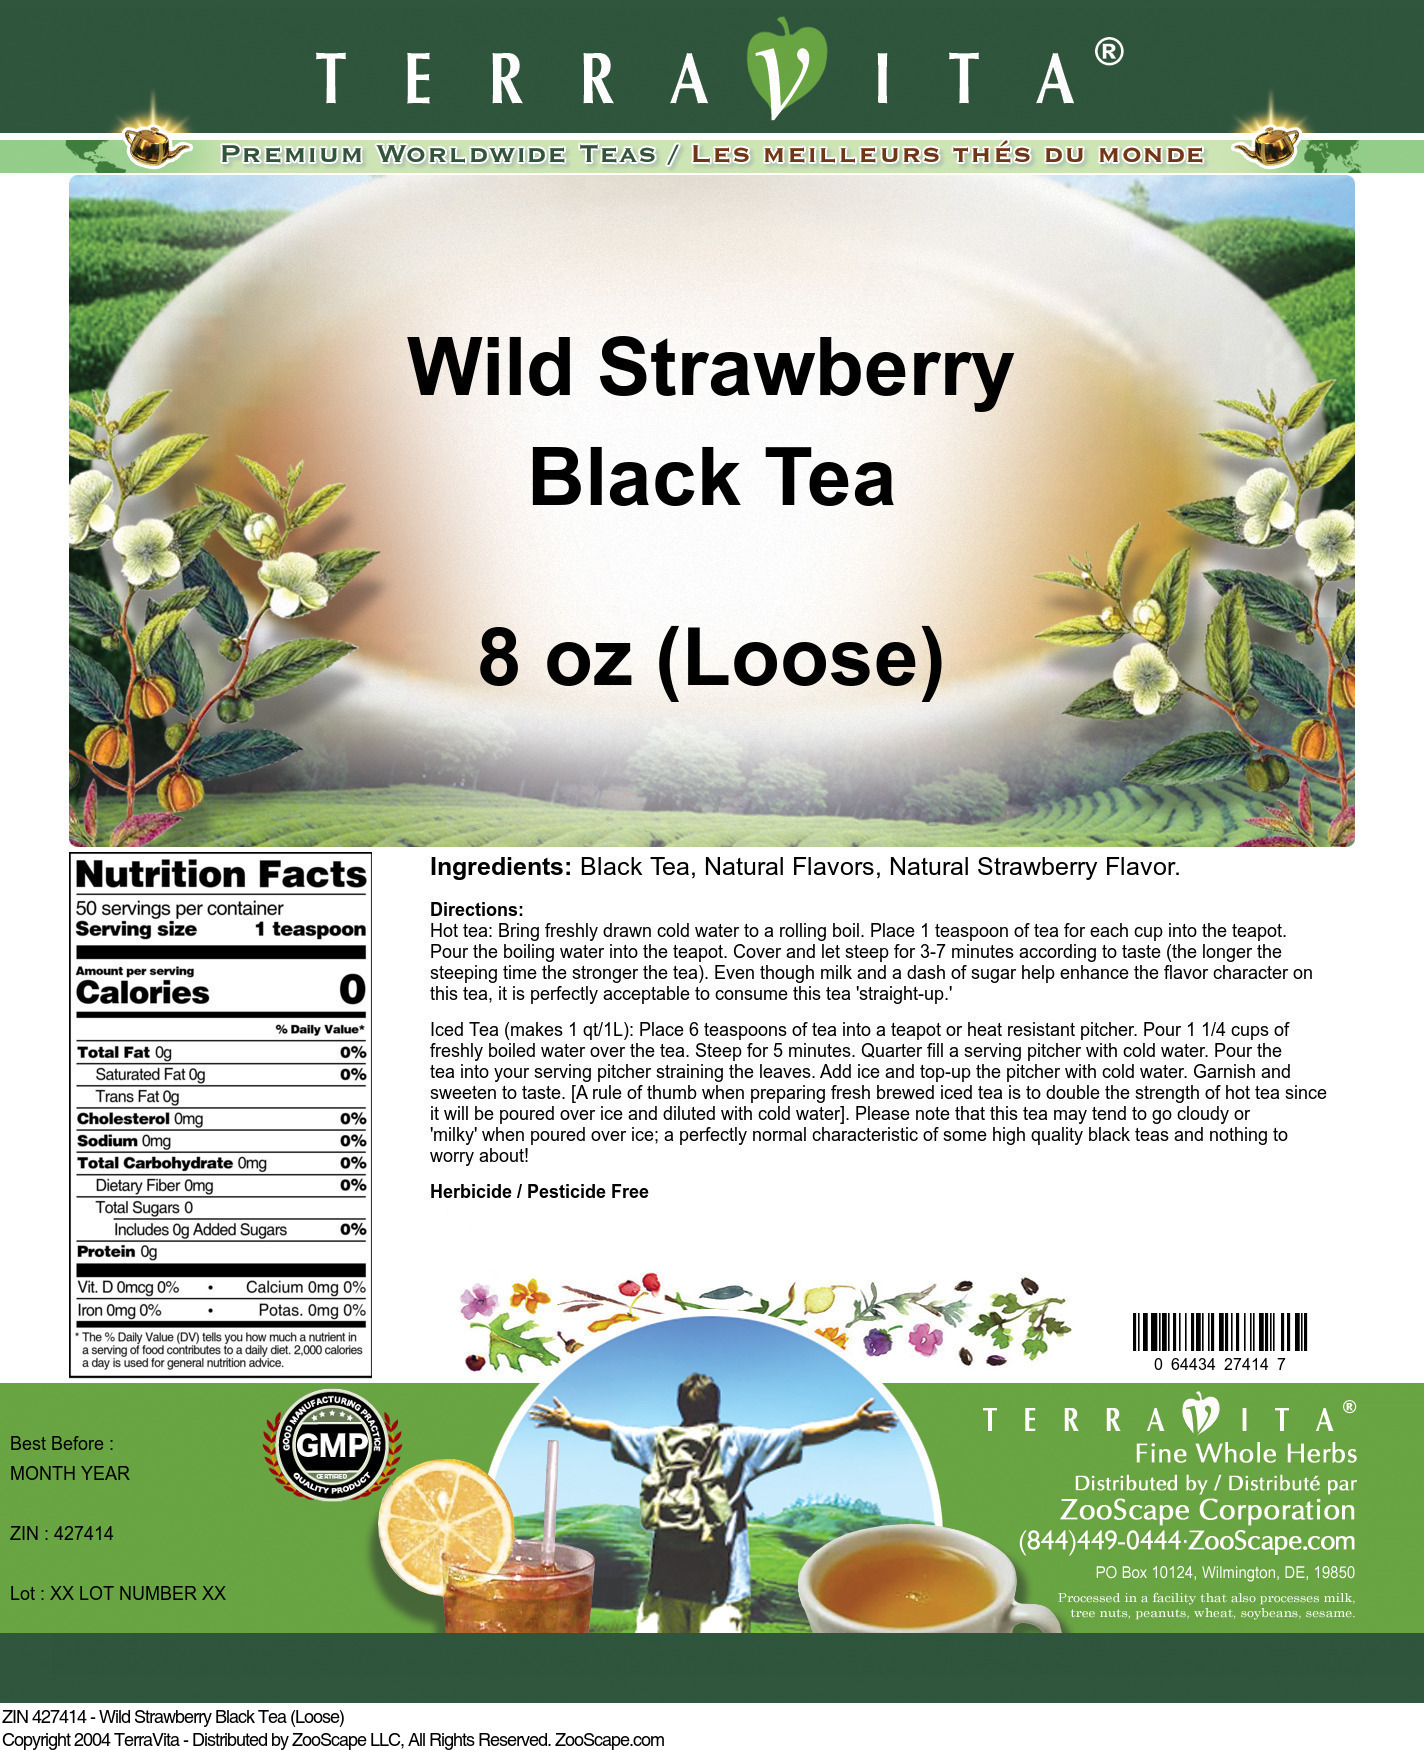 Wild Strawberry Black Tea (Loose) - Label